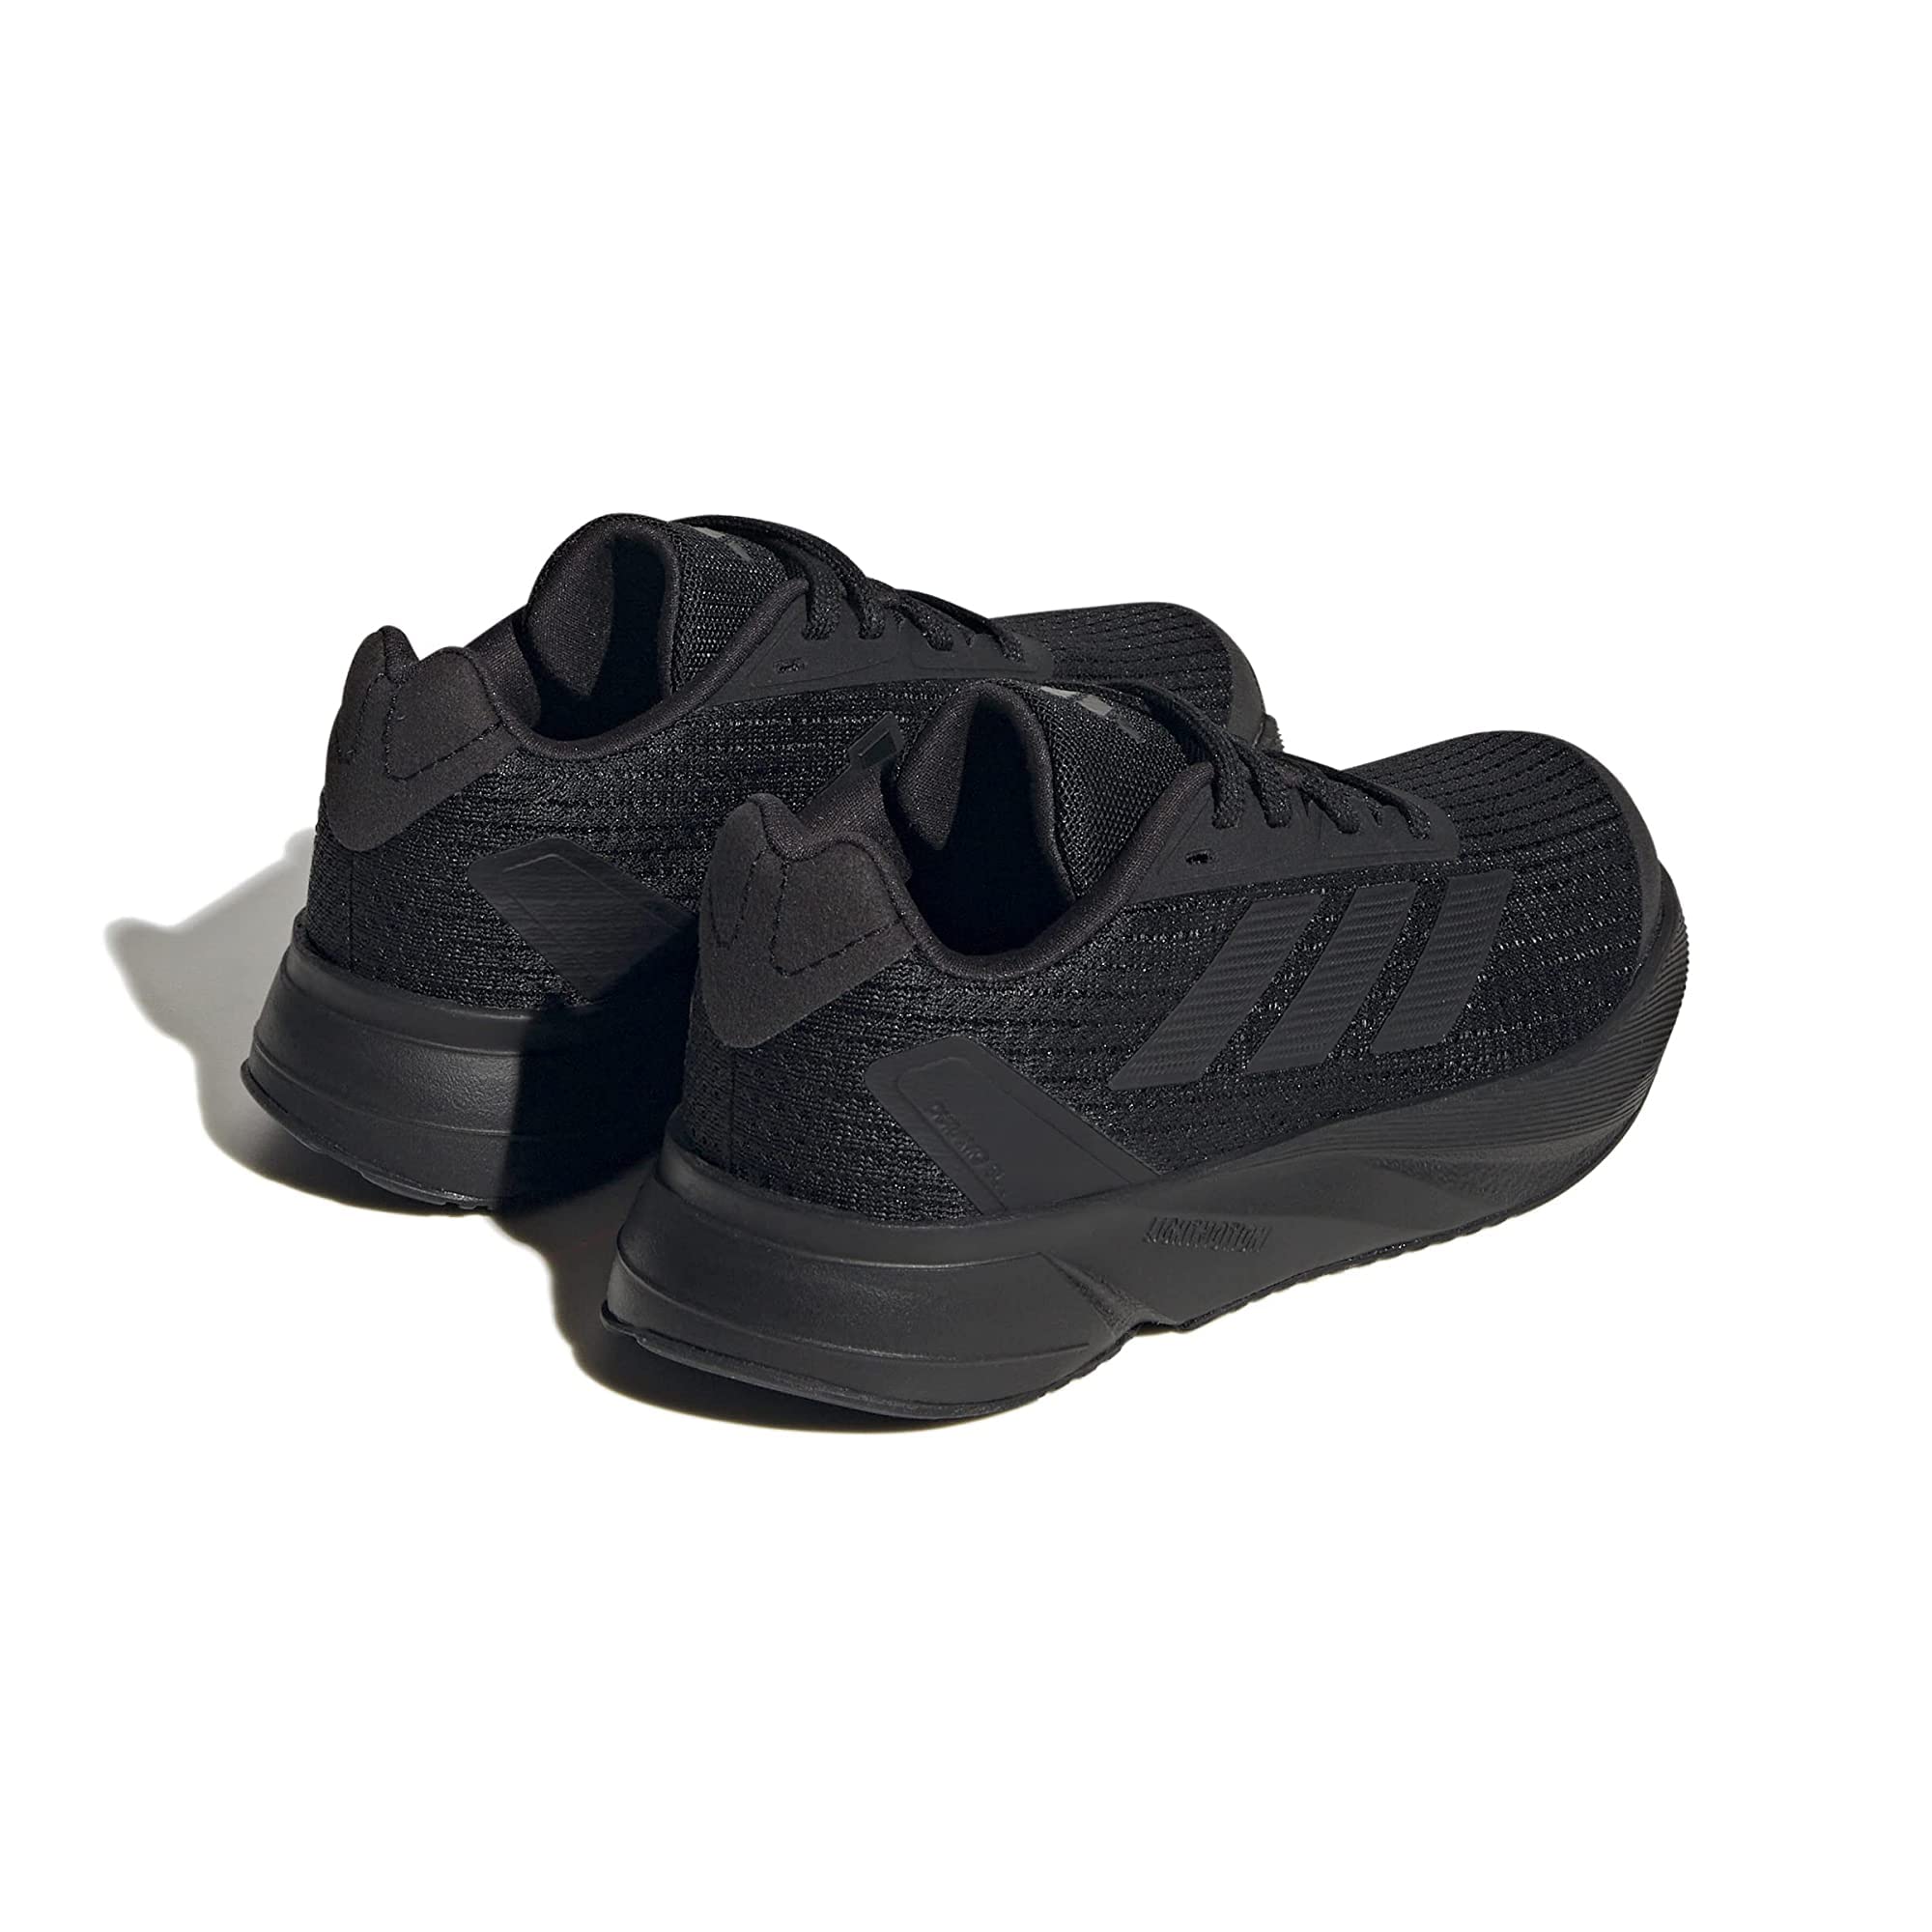 adidas Unisex-Child Duramo Sl Running Shoe